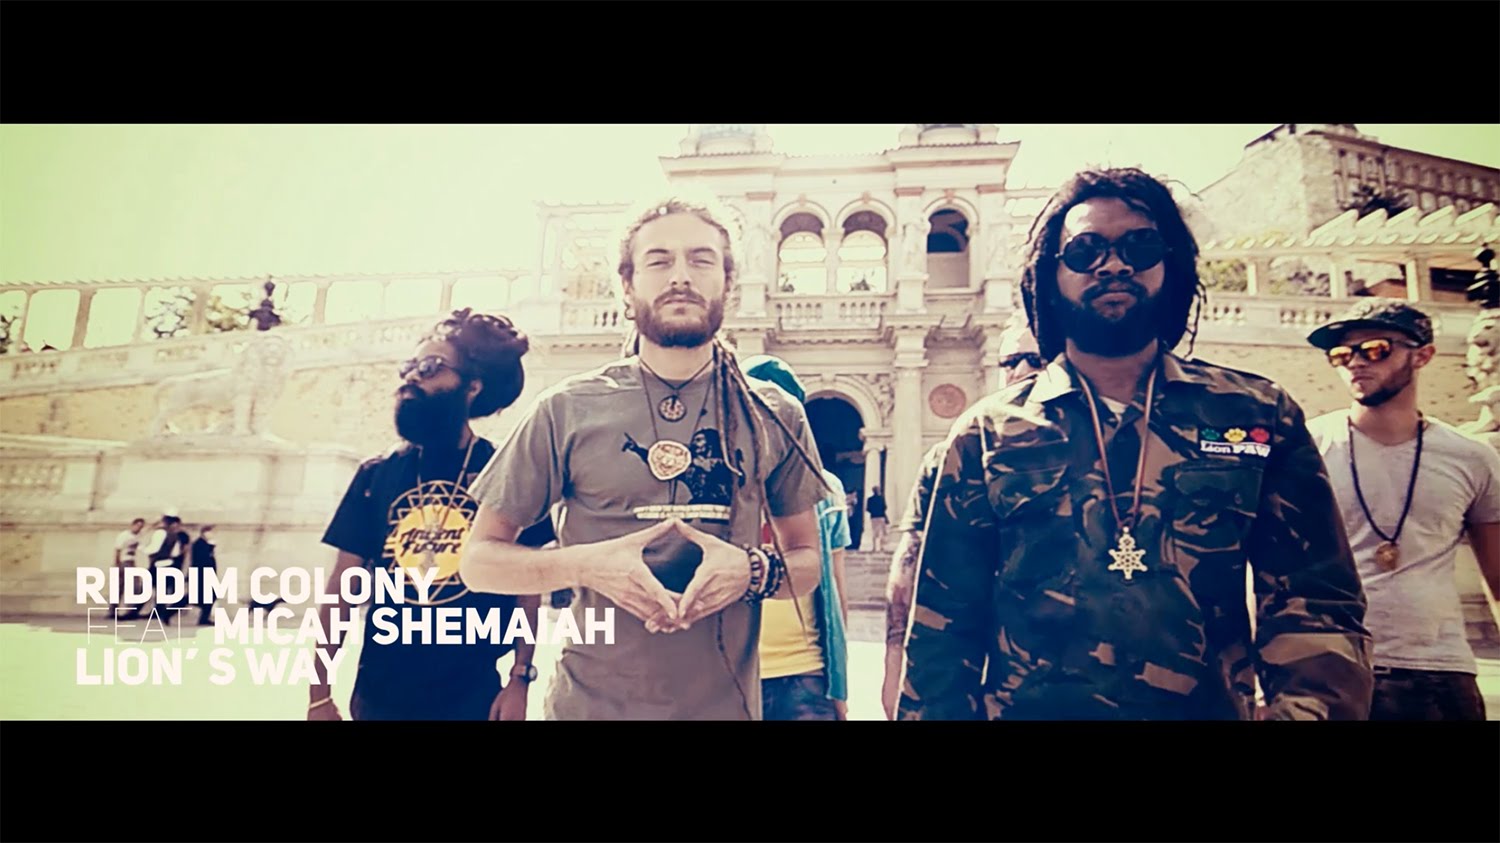 Riddim Colony feat. Micah Shemaiah - Lion's Way [7/6/2015]